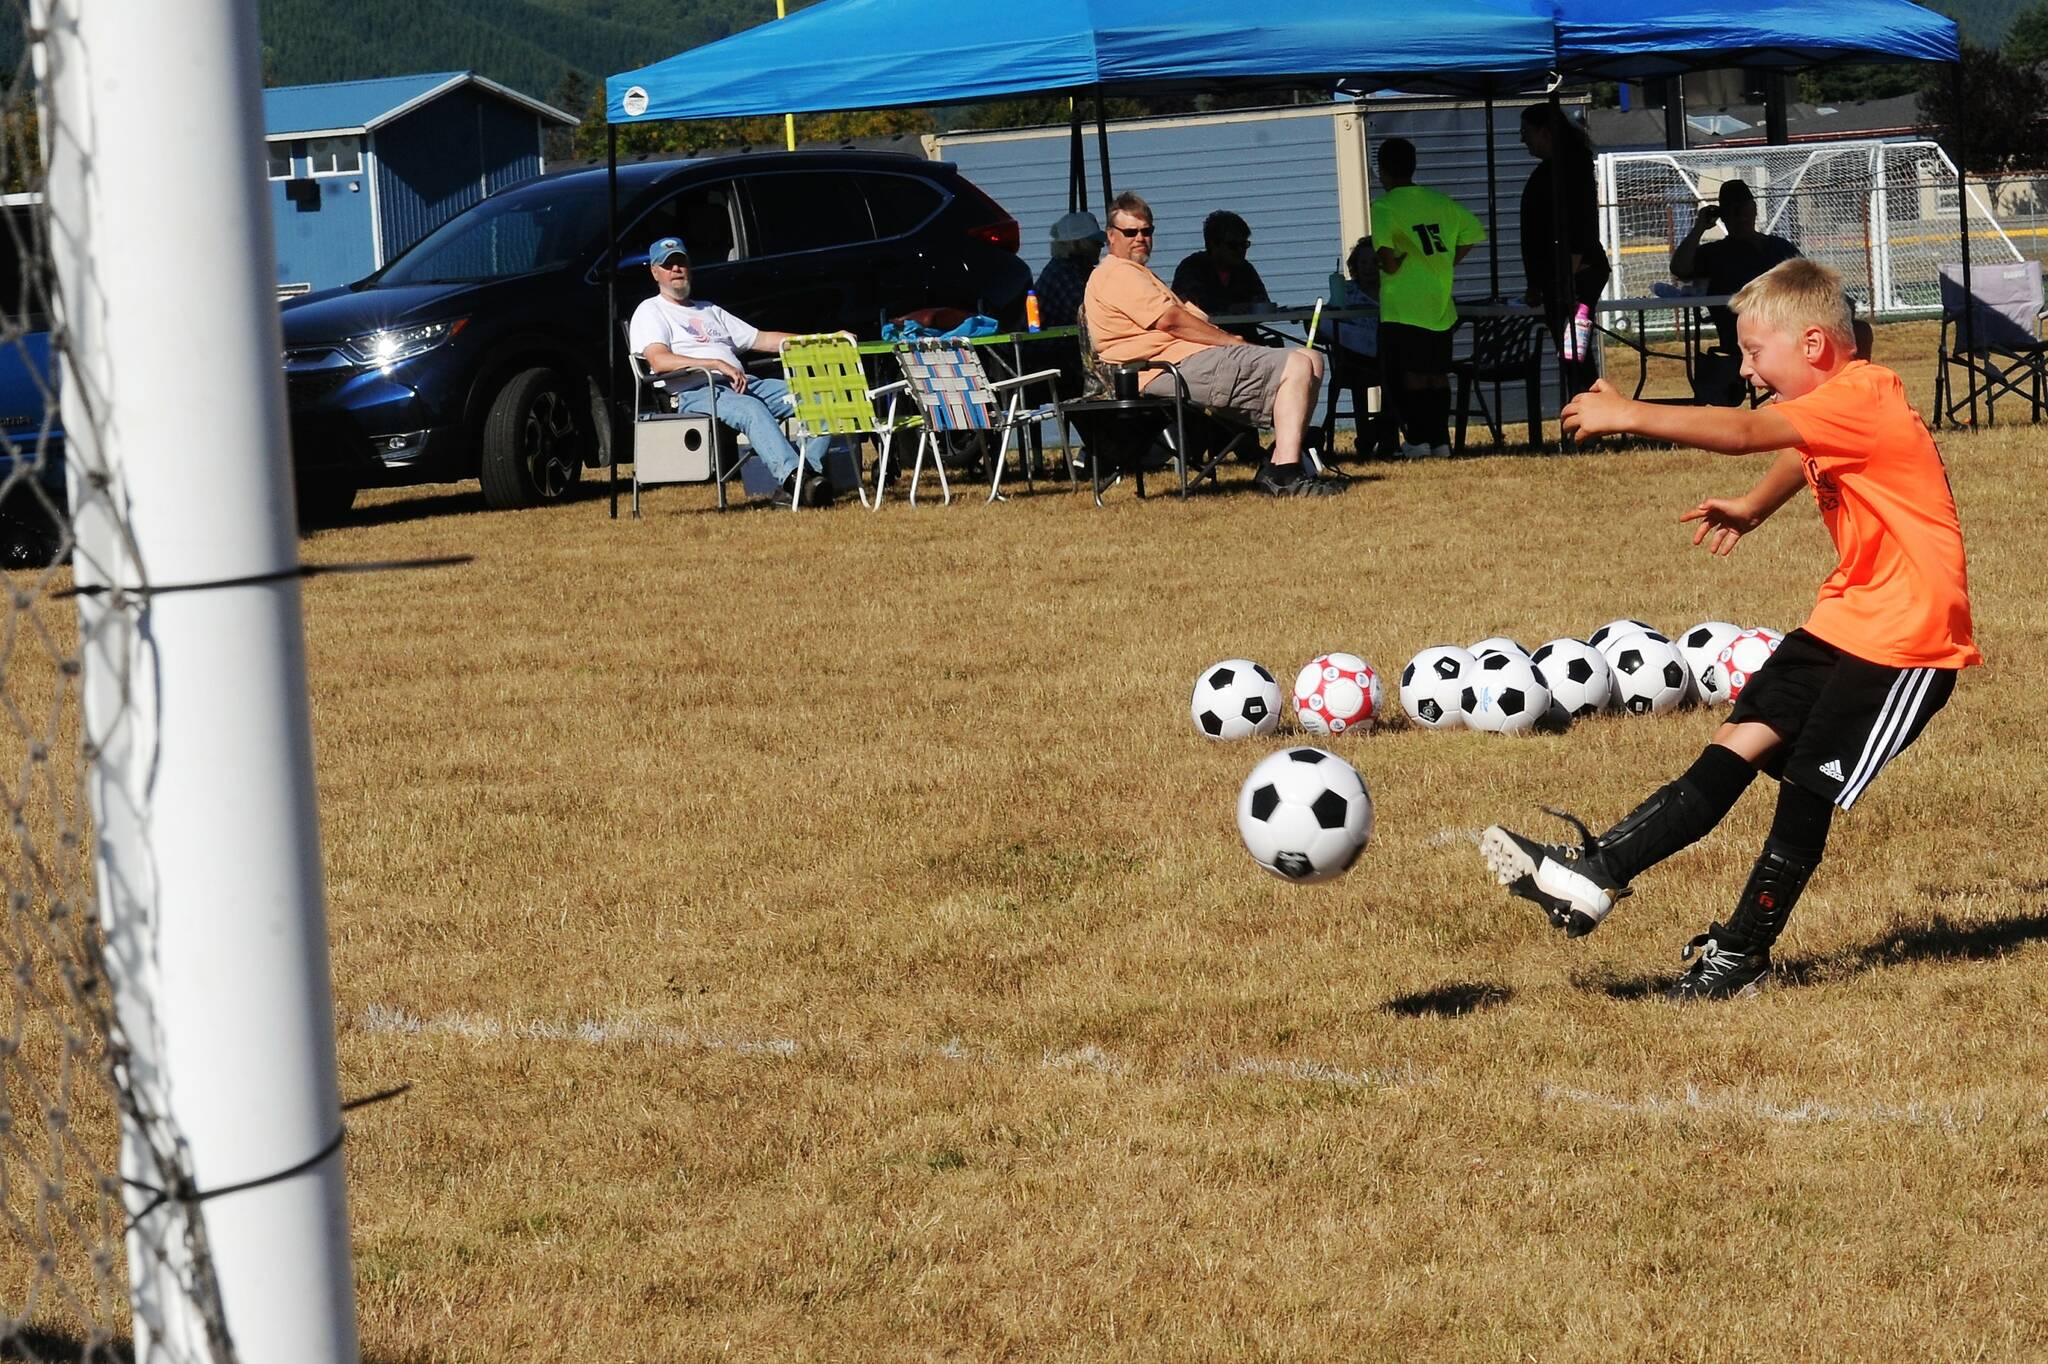 Drew Johnsen, age 8, tries his luck kicking goals.